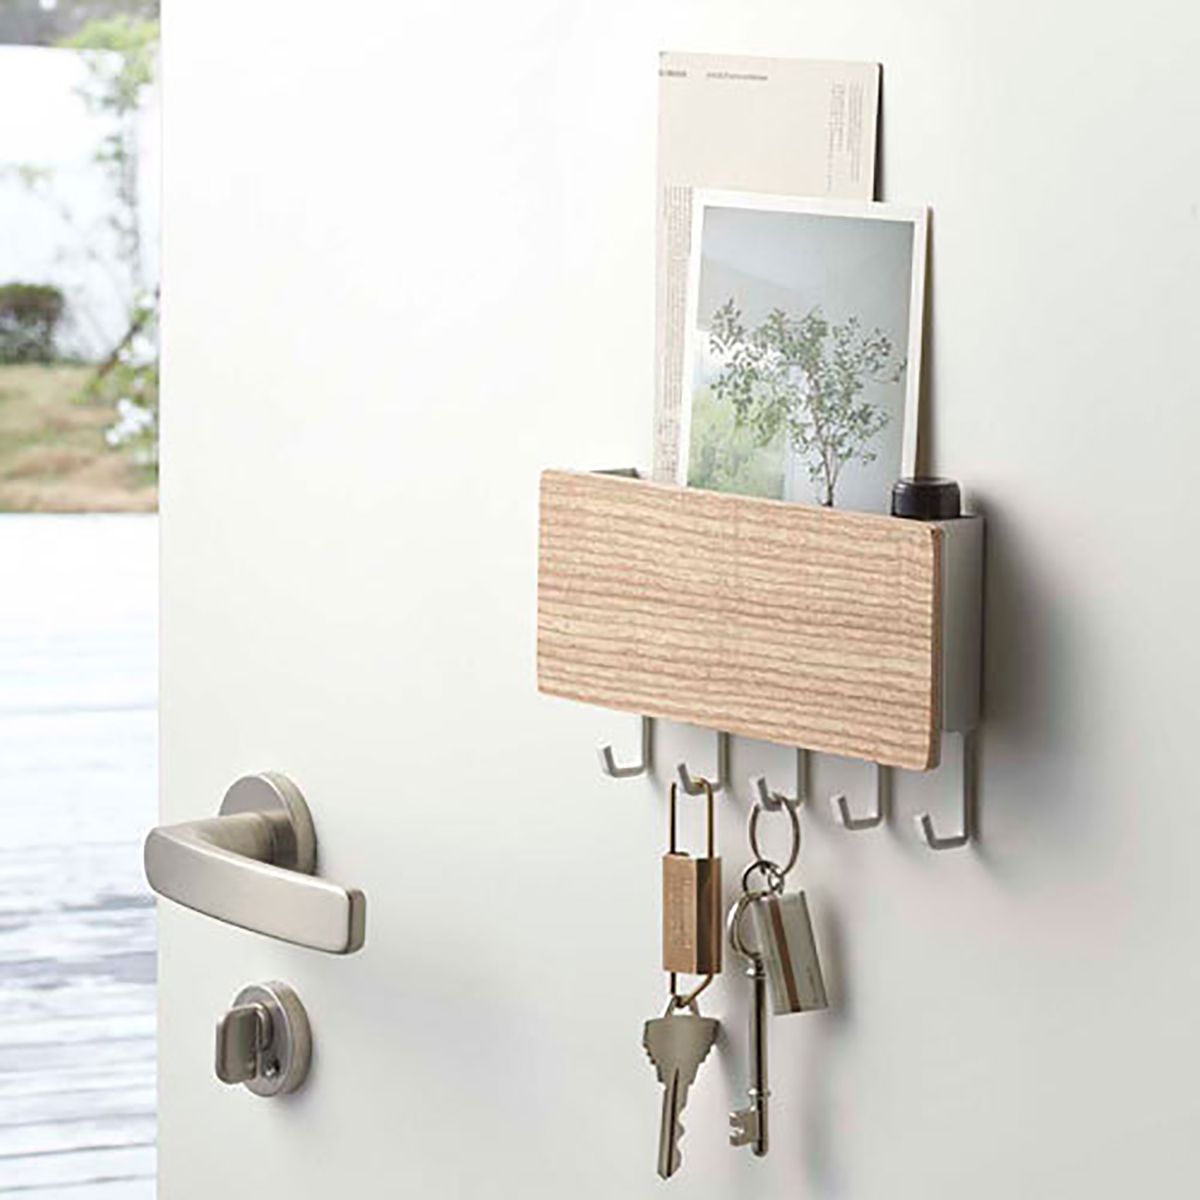 Coat-Key-Rack-Entrance-Storage-Wall-Mount-Hook-Door-Home-Room-Organizer-1555239